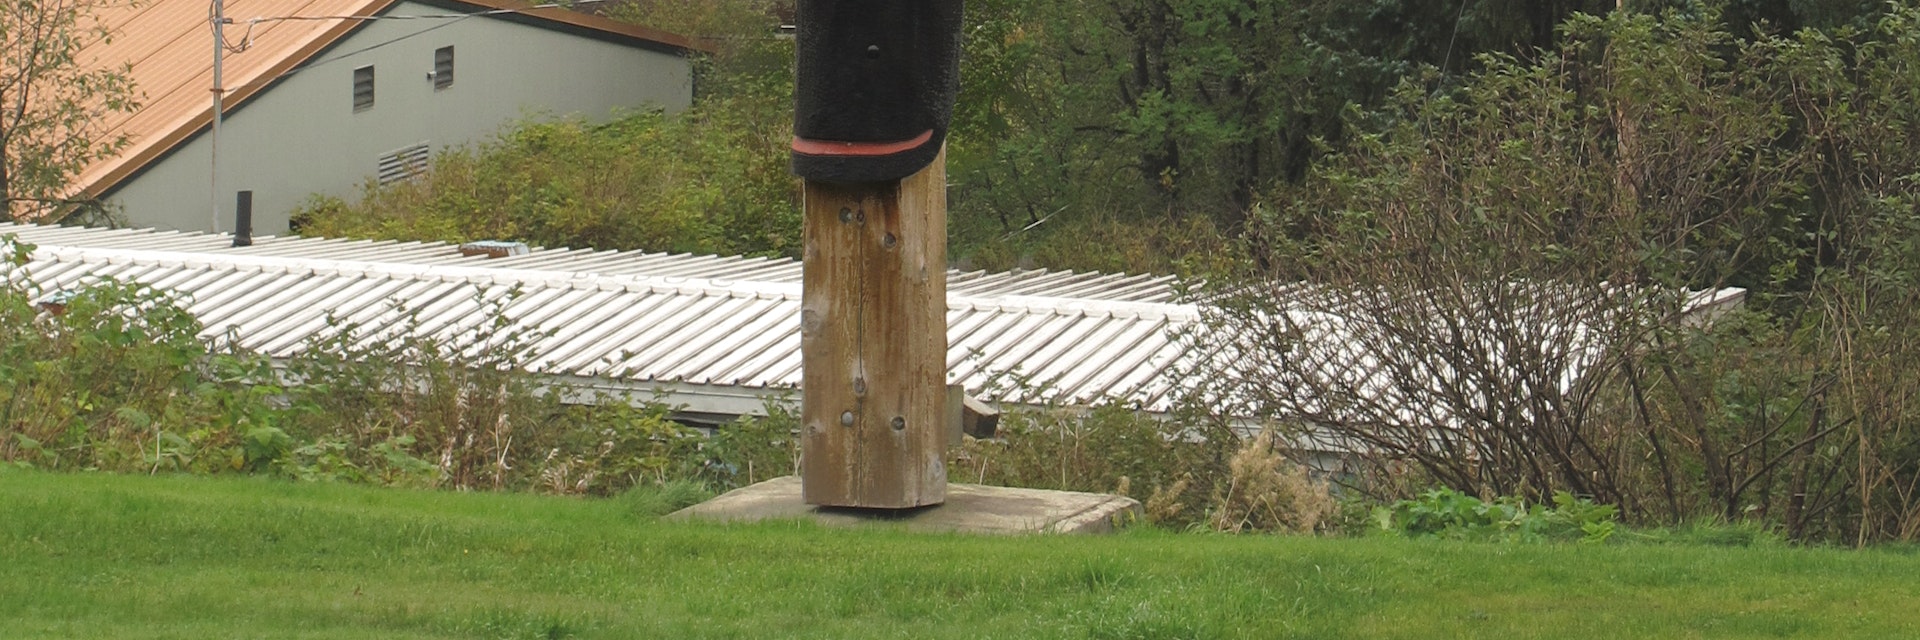 Totem Pole at Klawock Park, Prince of Wales Island, Alaska.